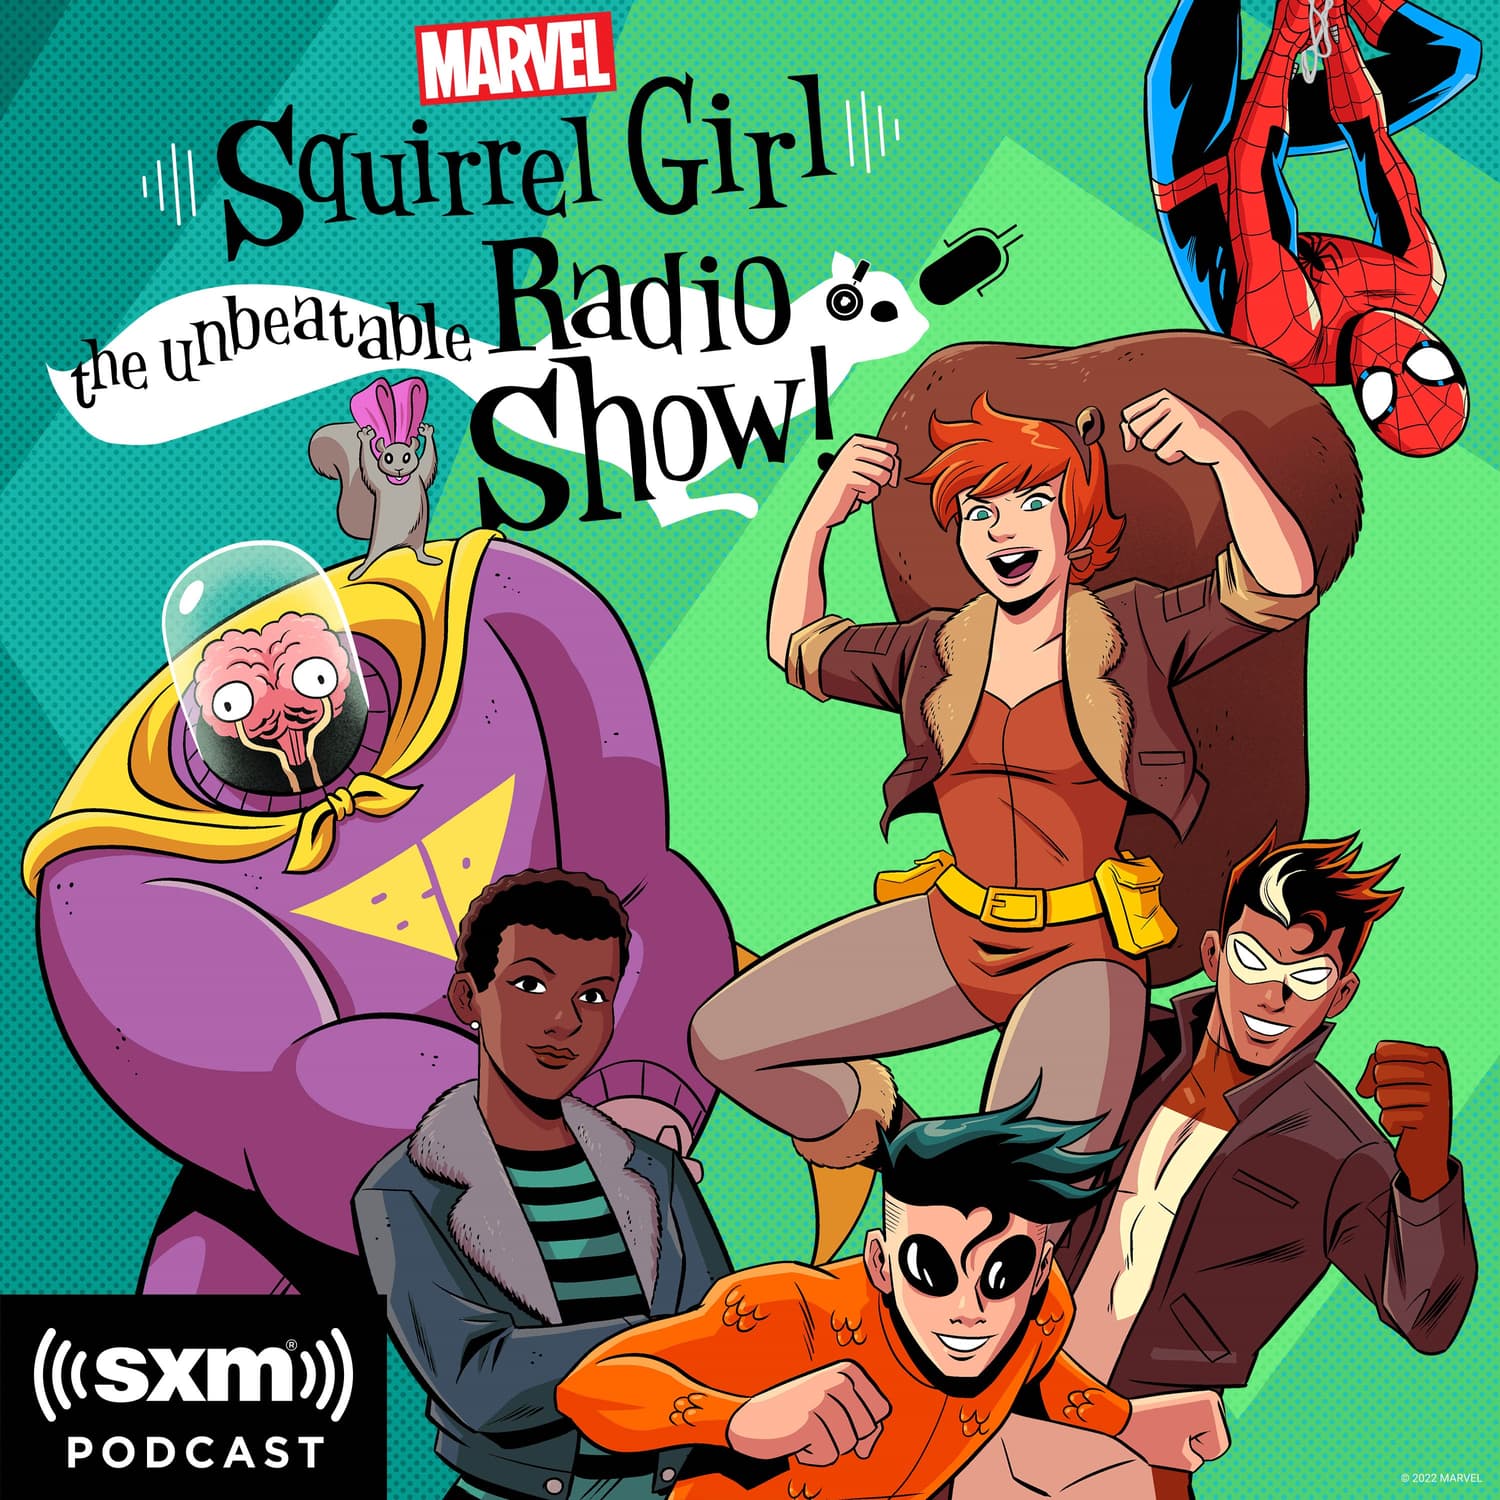 Marvel’s Squirrel Girl: The Unbeatable Radio Show! Announcement Image